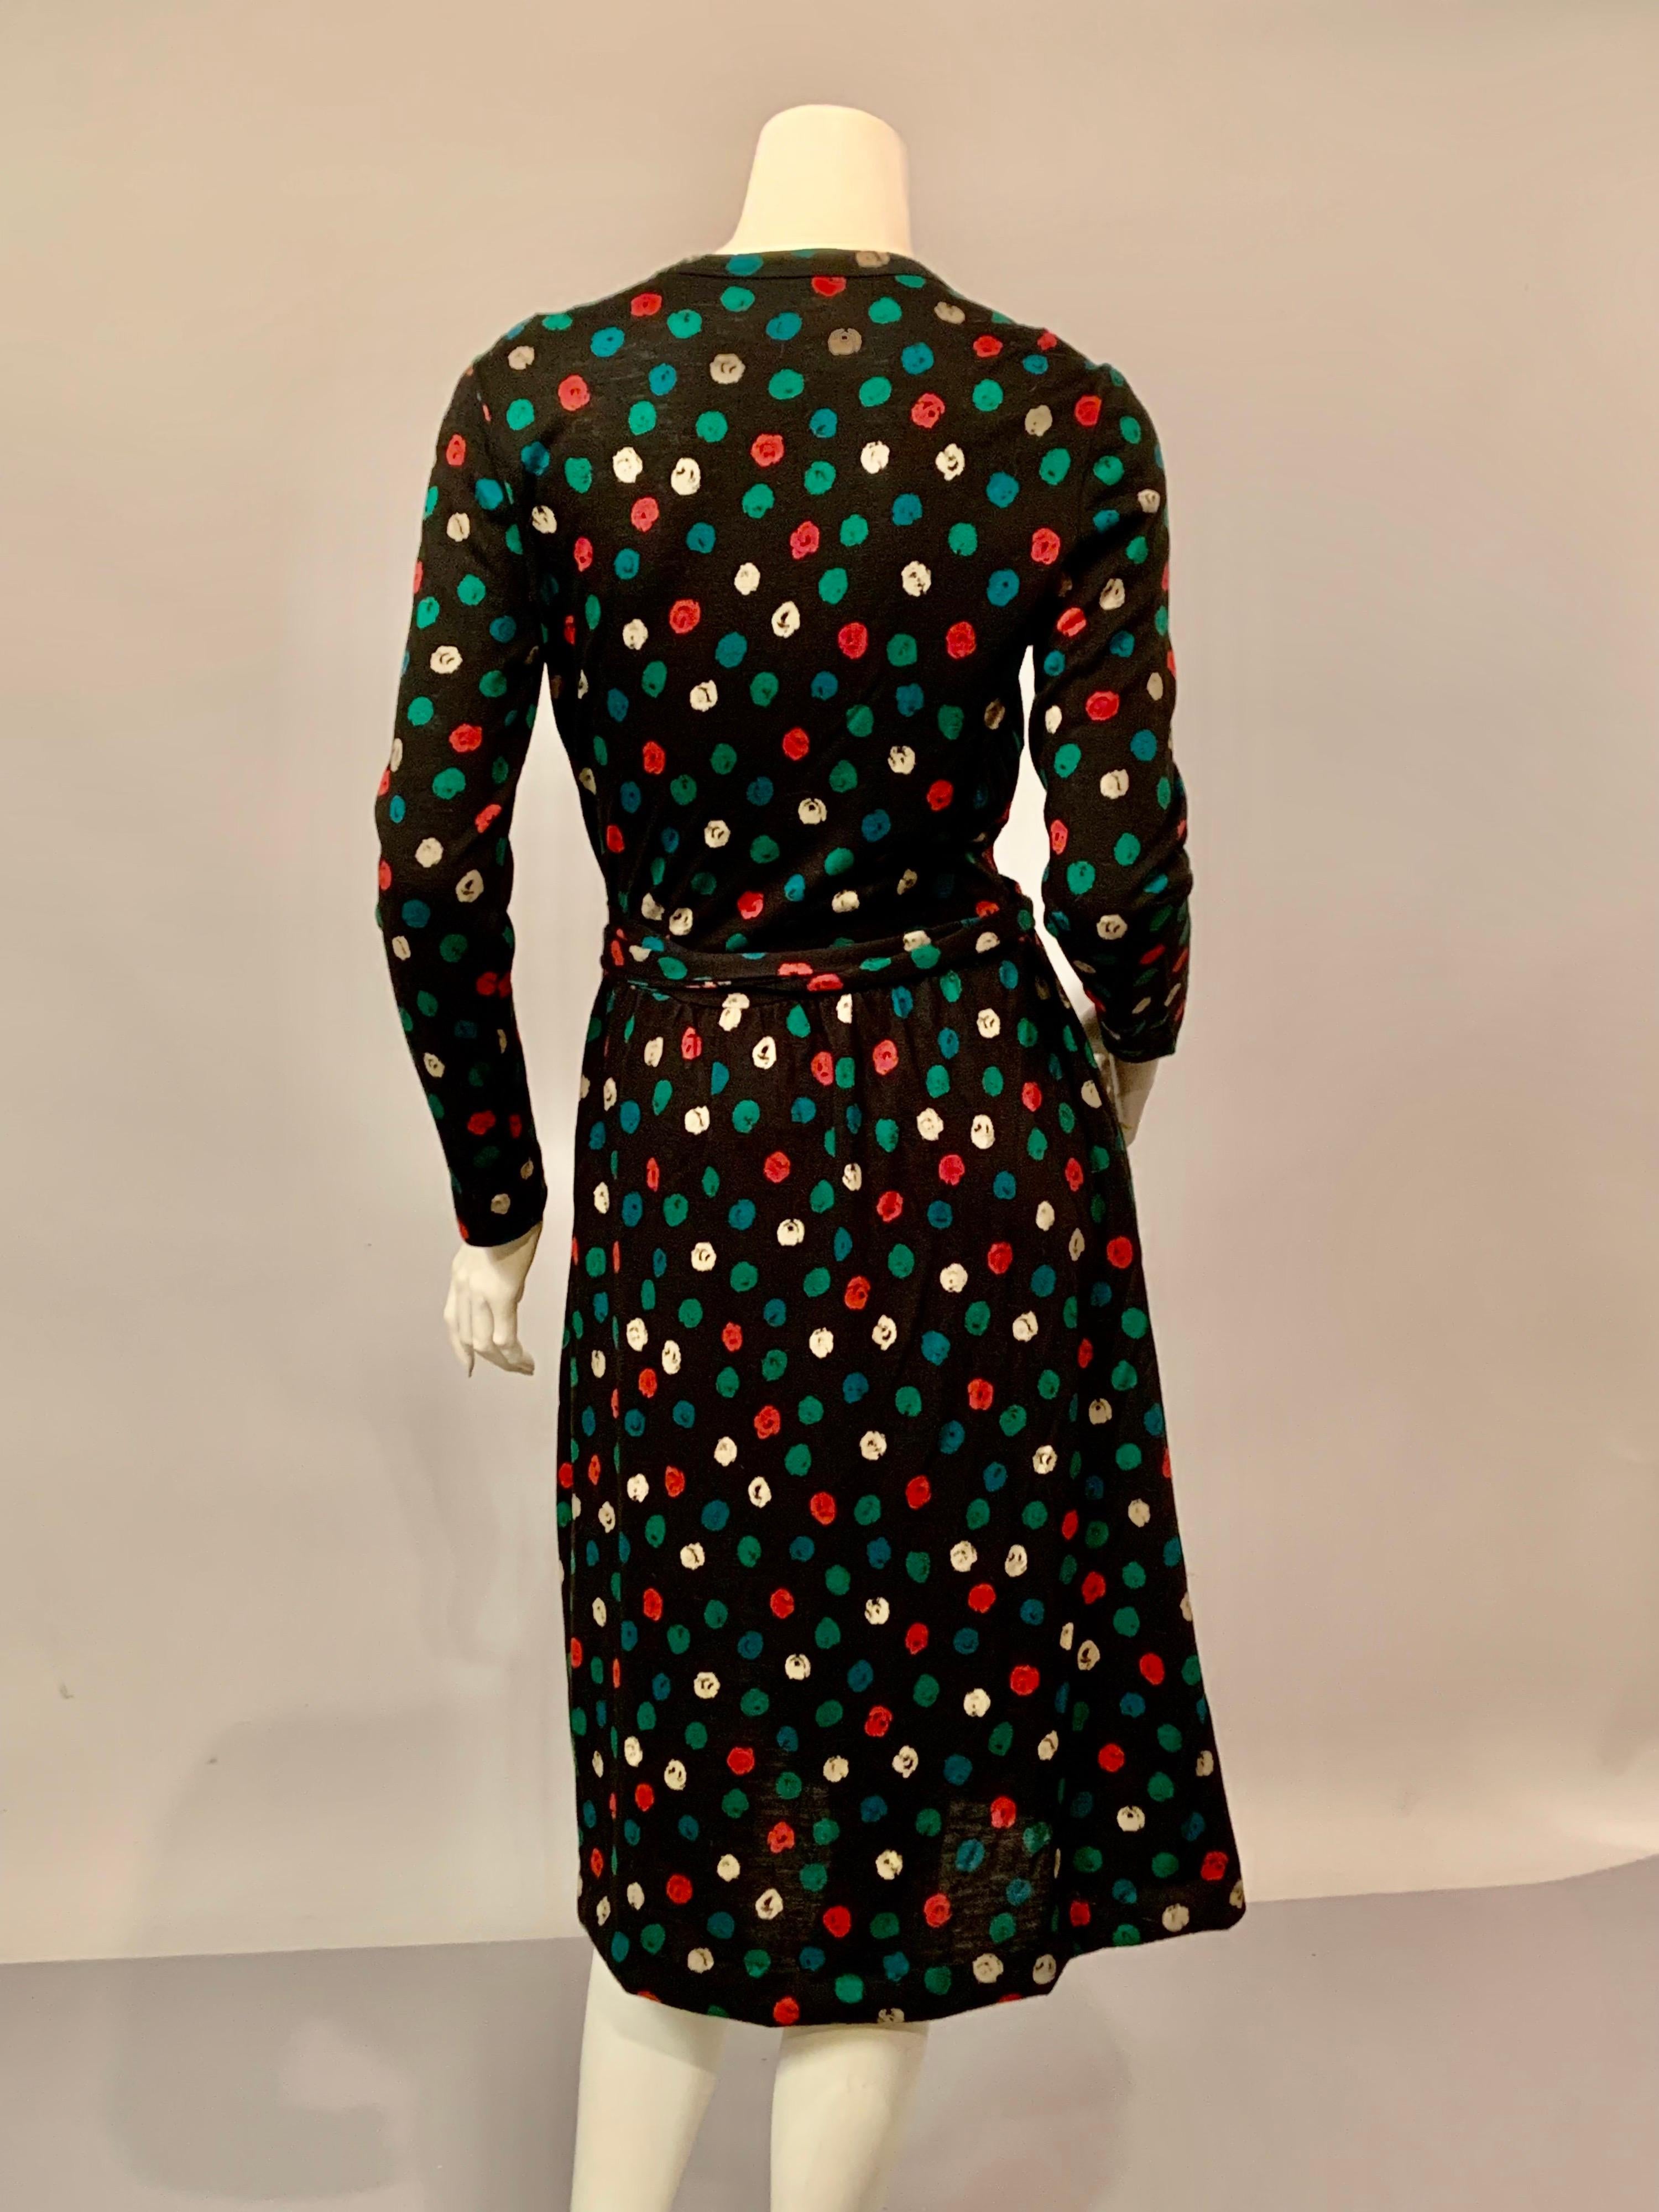 Black 1970's Diane von Furstenberg Wrap Dress in an Abstract Floral Print  For Sale